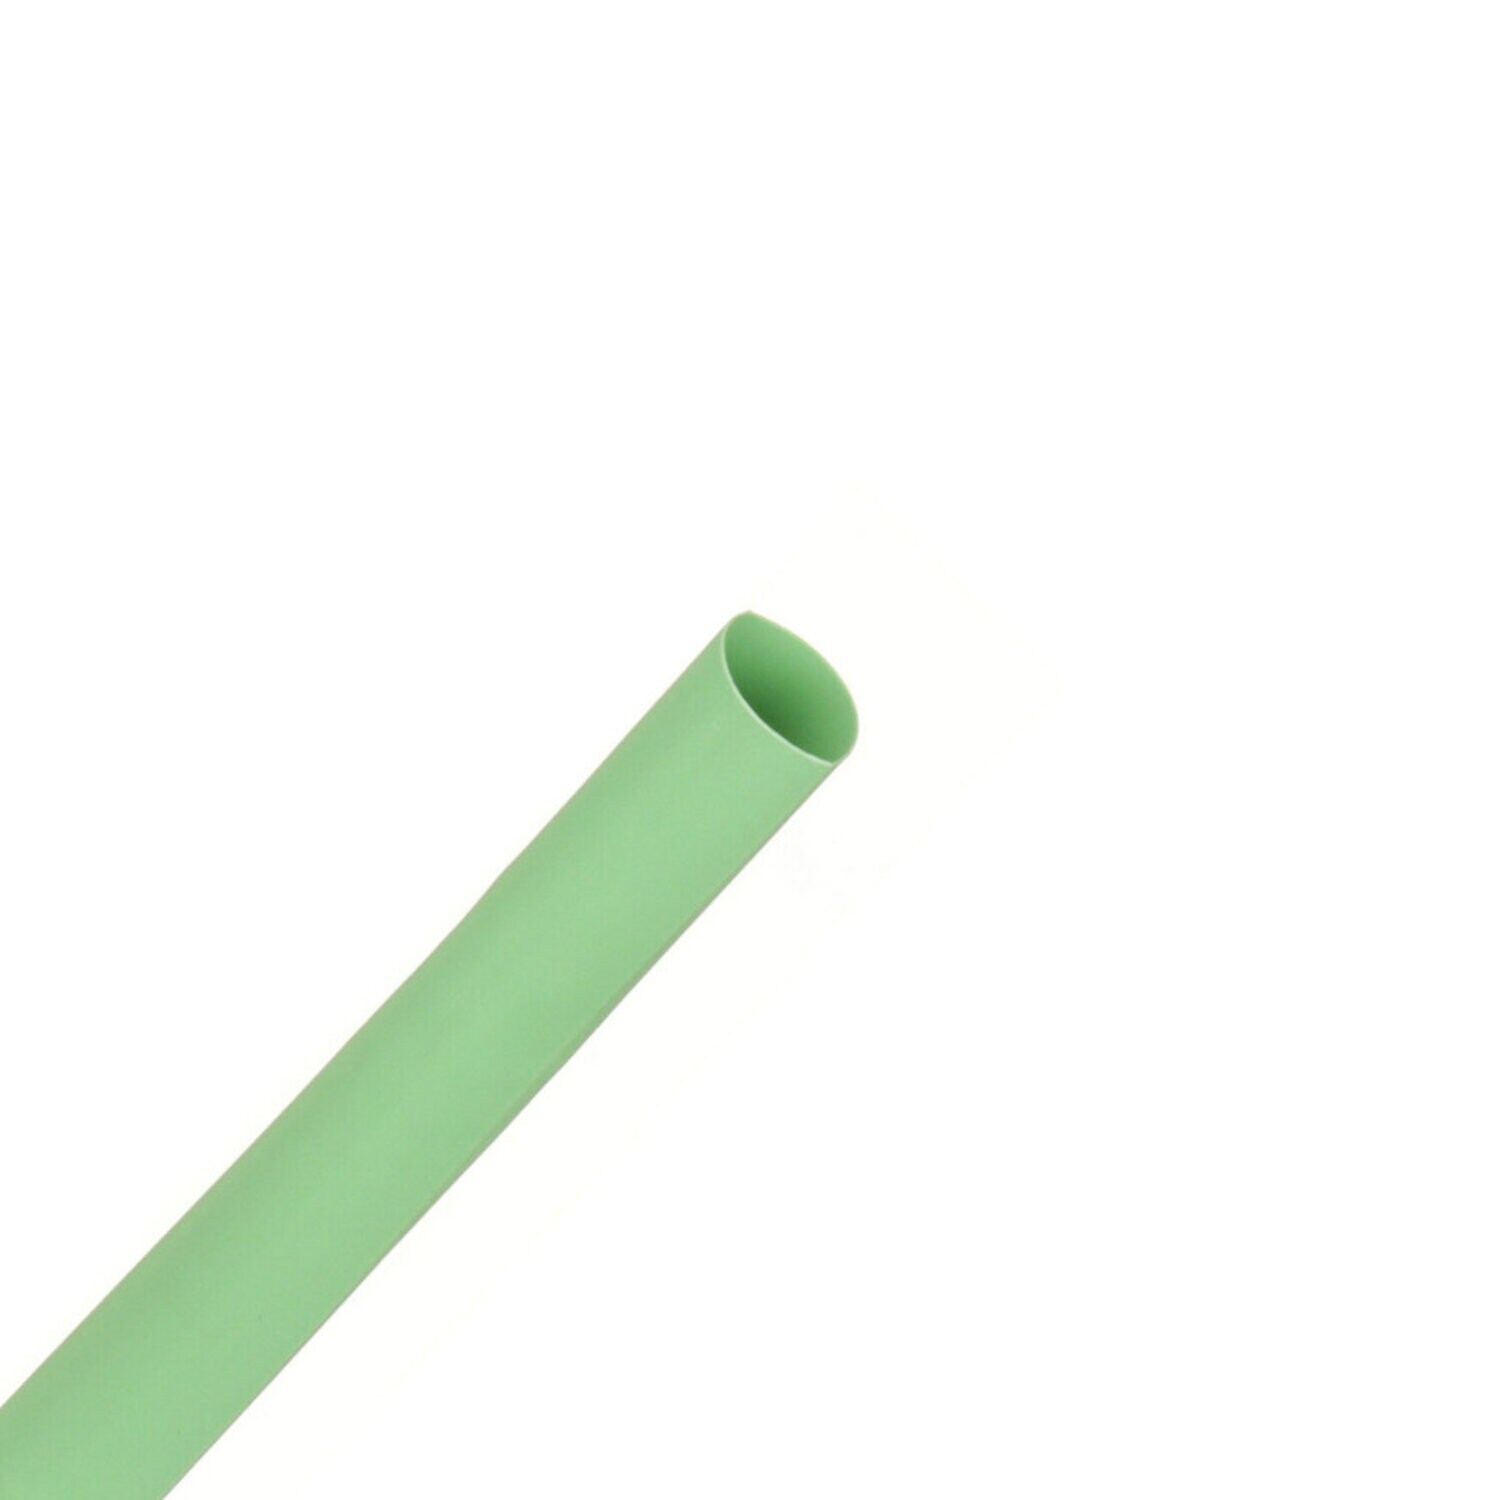 7100025160 - 3M Heat Shrink Thin-Wall Tubing FP-301-1/2-Green-200`: 200 ft spool
length, 1/case